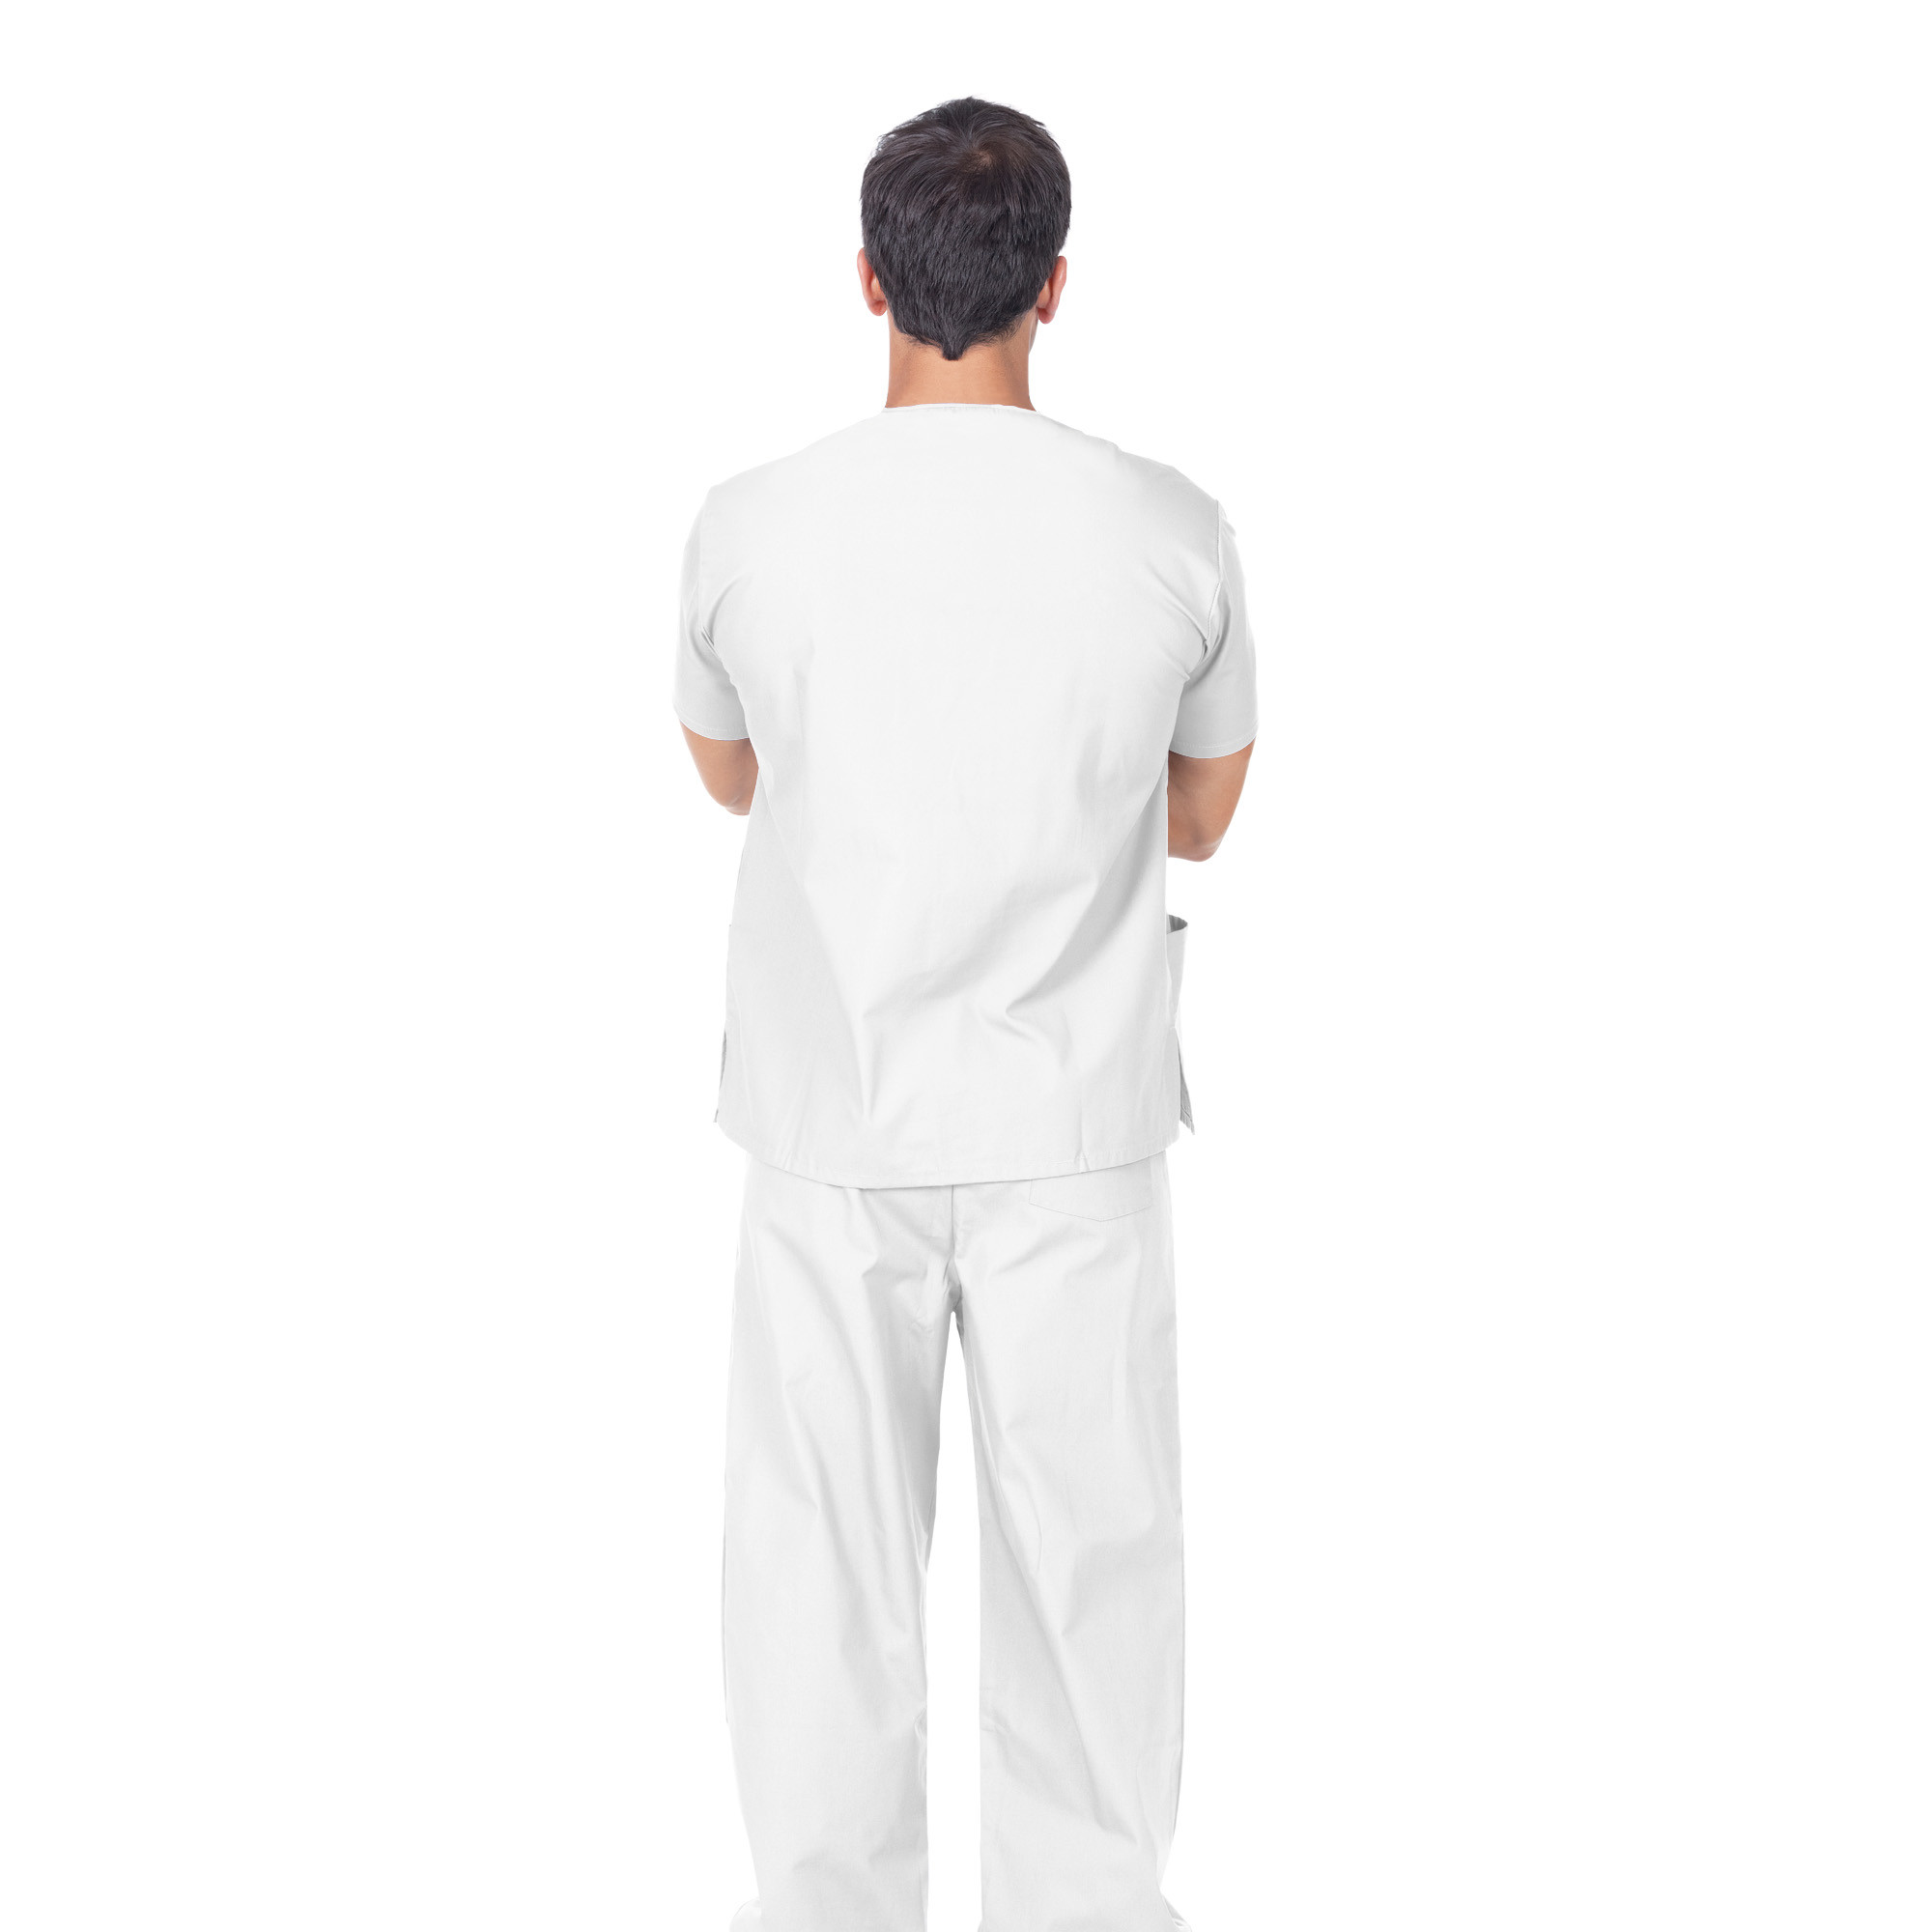 Pantaloni professionali in cotone bianco Unisex taglia Medium